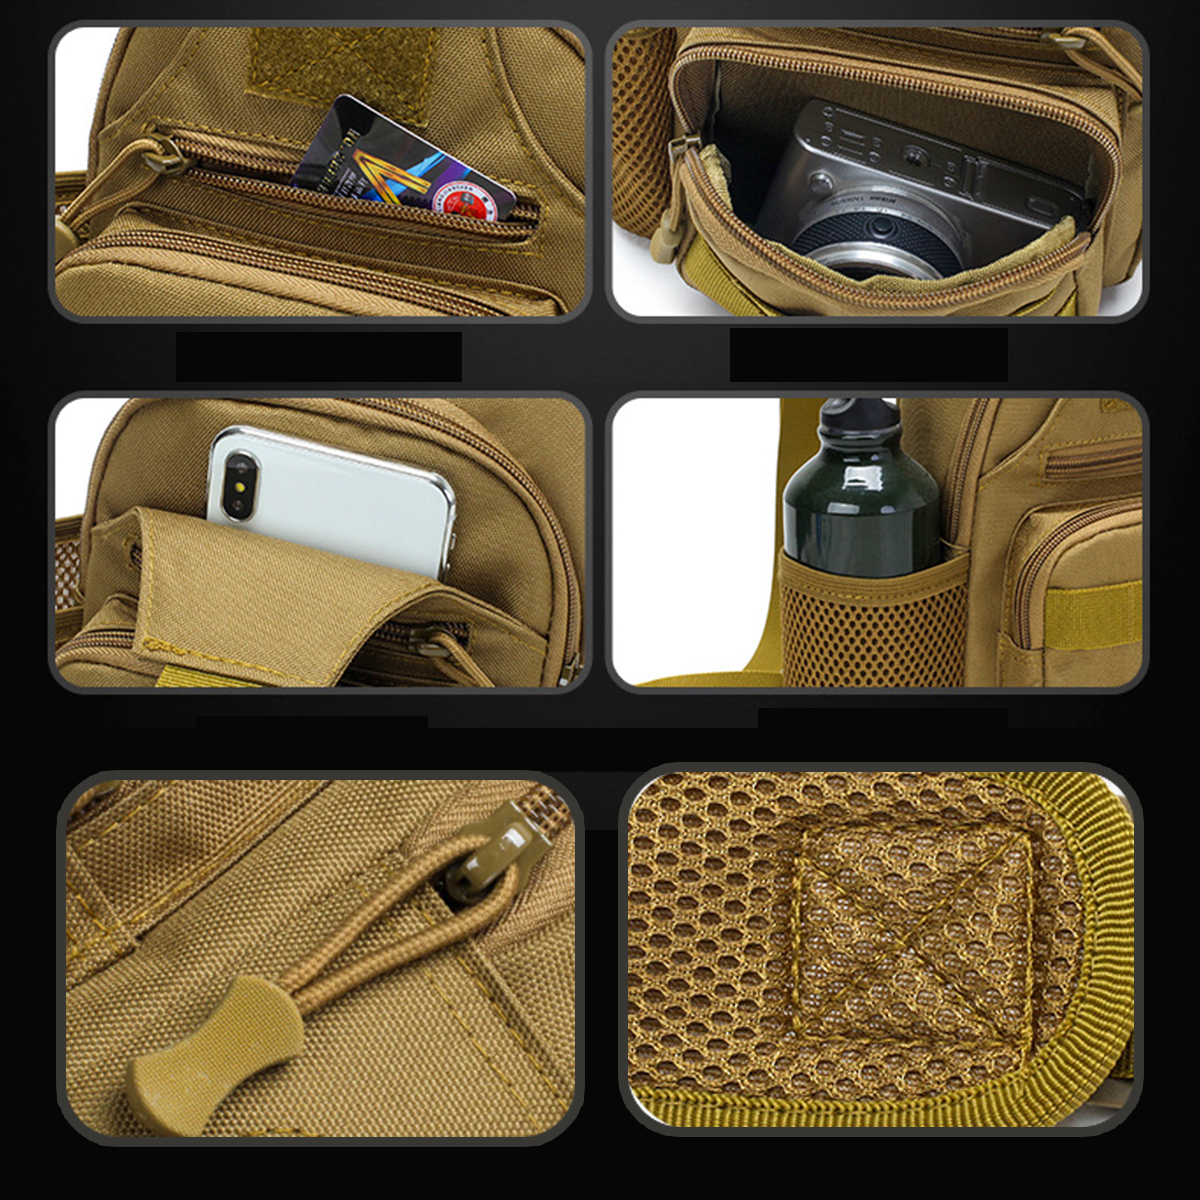 Oxford-Cloth-Tactical-Bag-USB-Charging-Chest-Bag-Climbing-Hiking-Shoulder-Bag-1612919-3